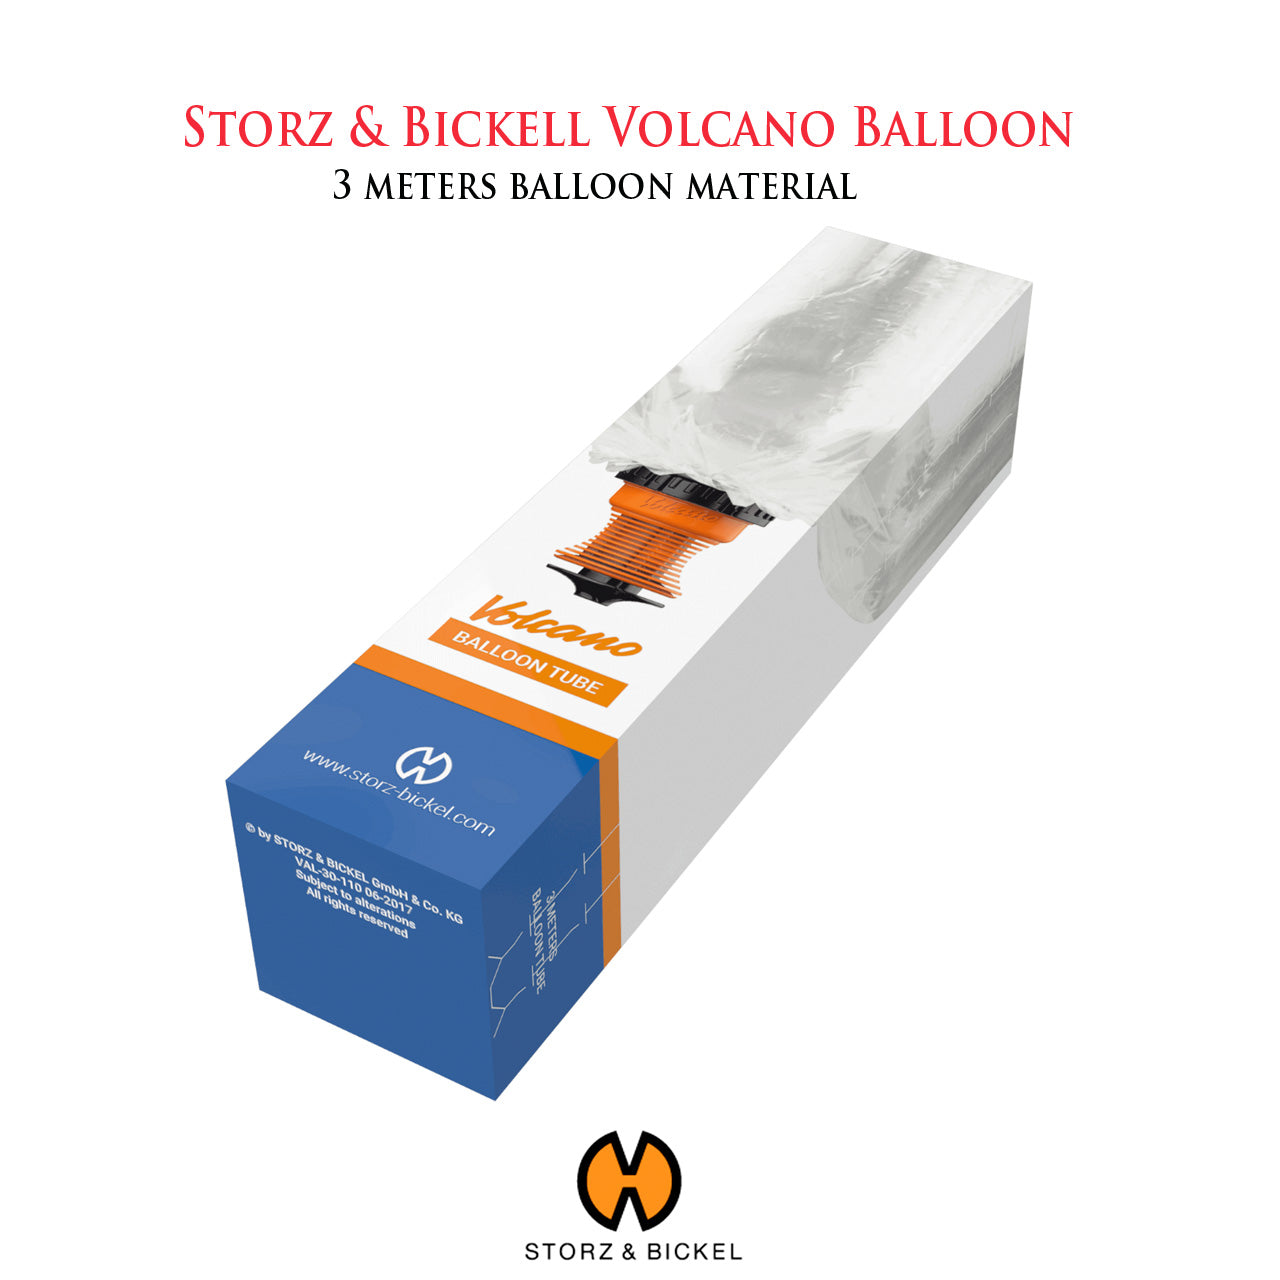  STORZ & BICKEL VOLCANO BALLON TUBES 